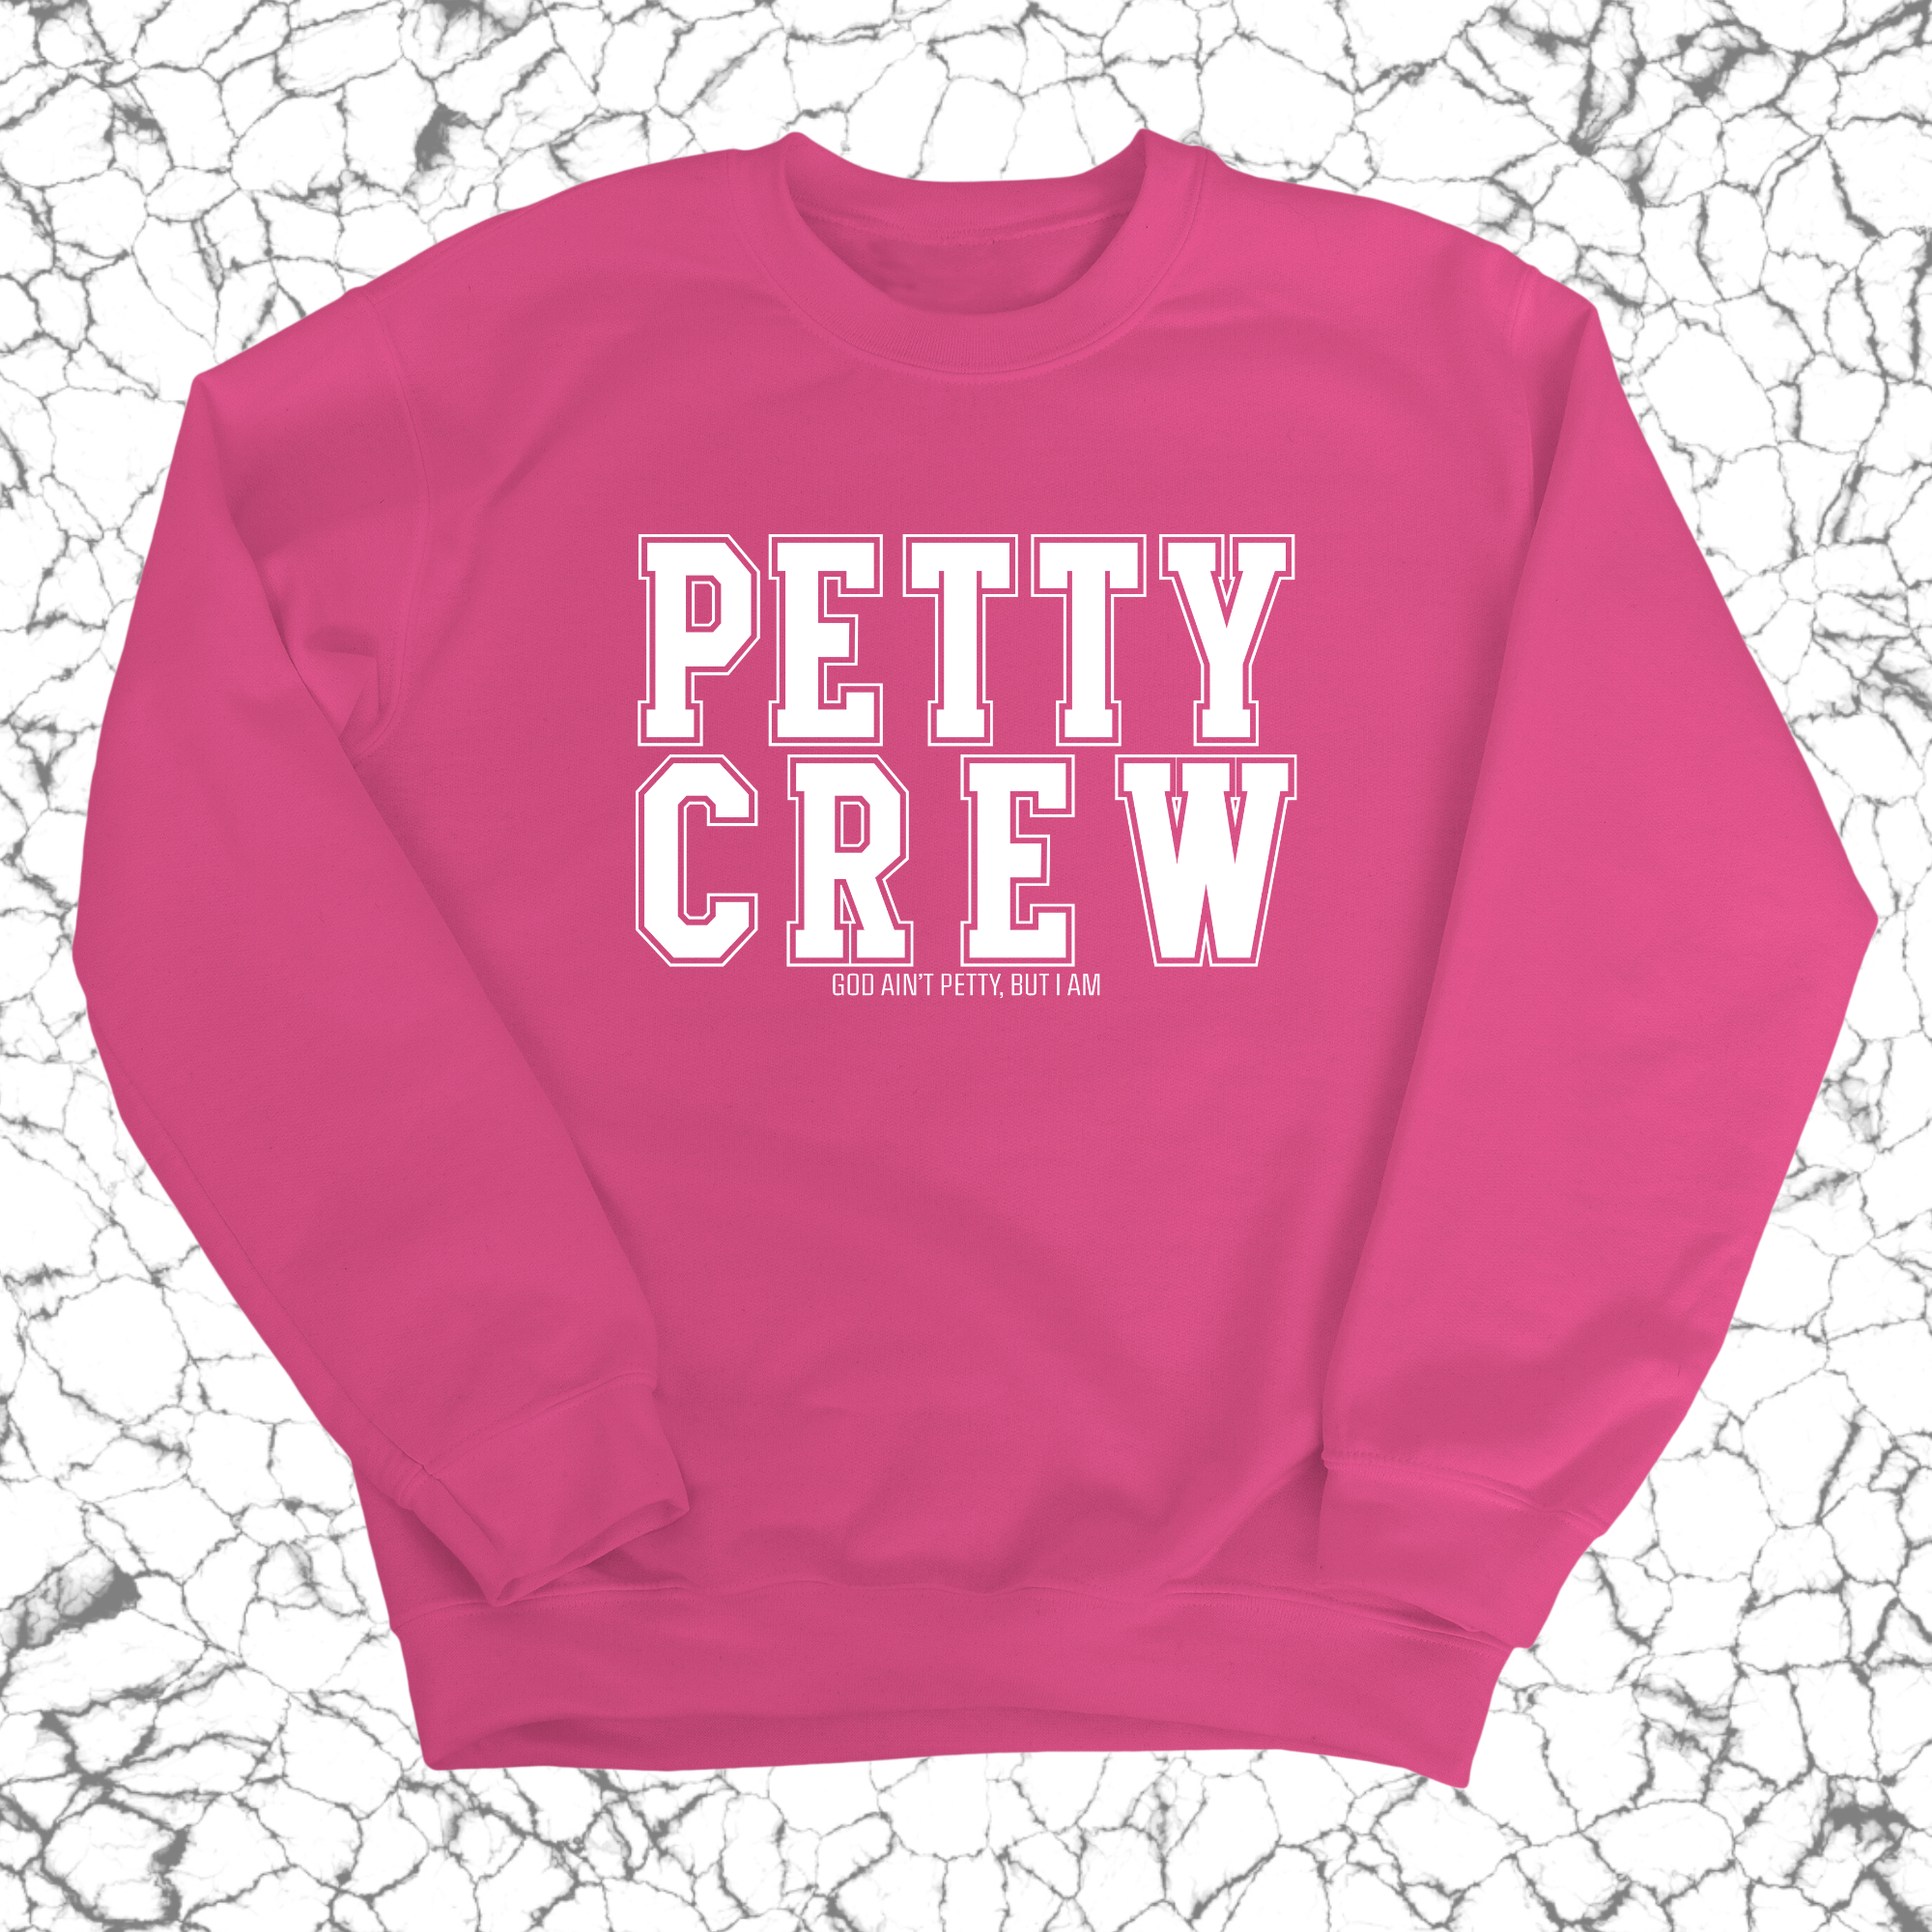 Petty Crew Unisex Sweatshirt-Sweatshirt-The Original God Ain't Petty But I Am